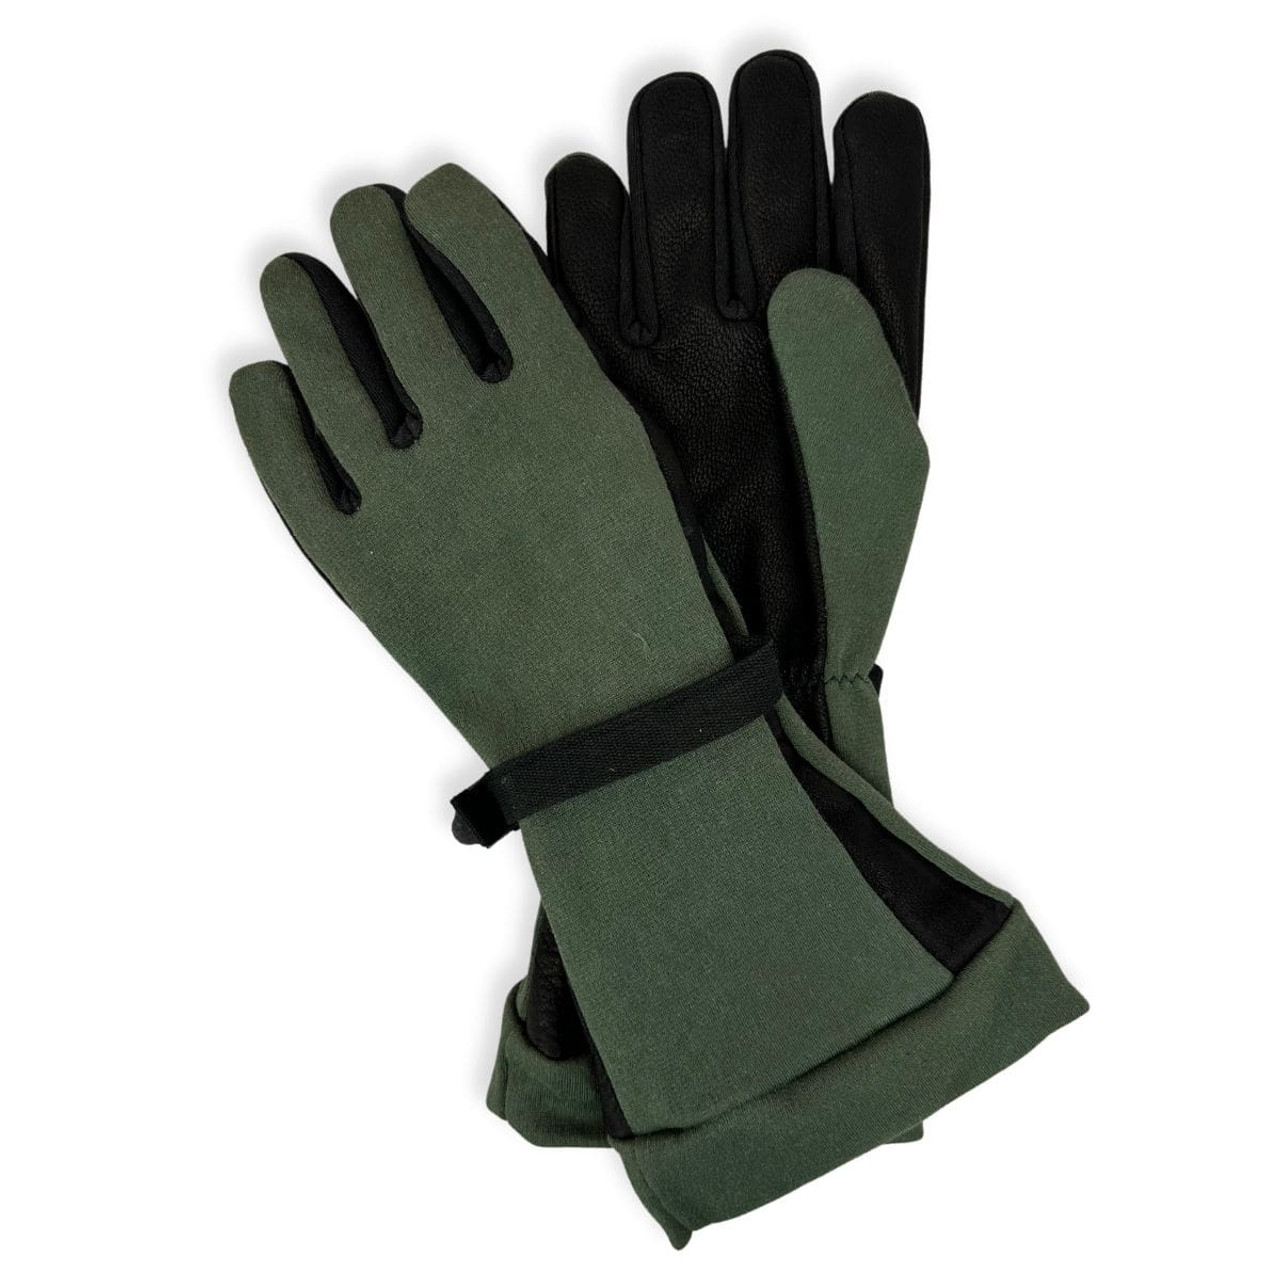 U.S. Issue Fuel Handler Gloves, Fire Resistant